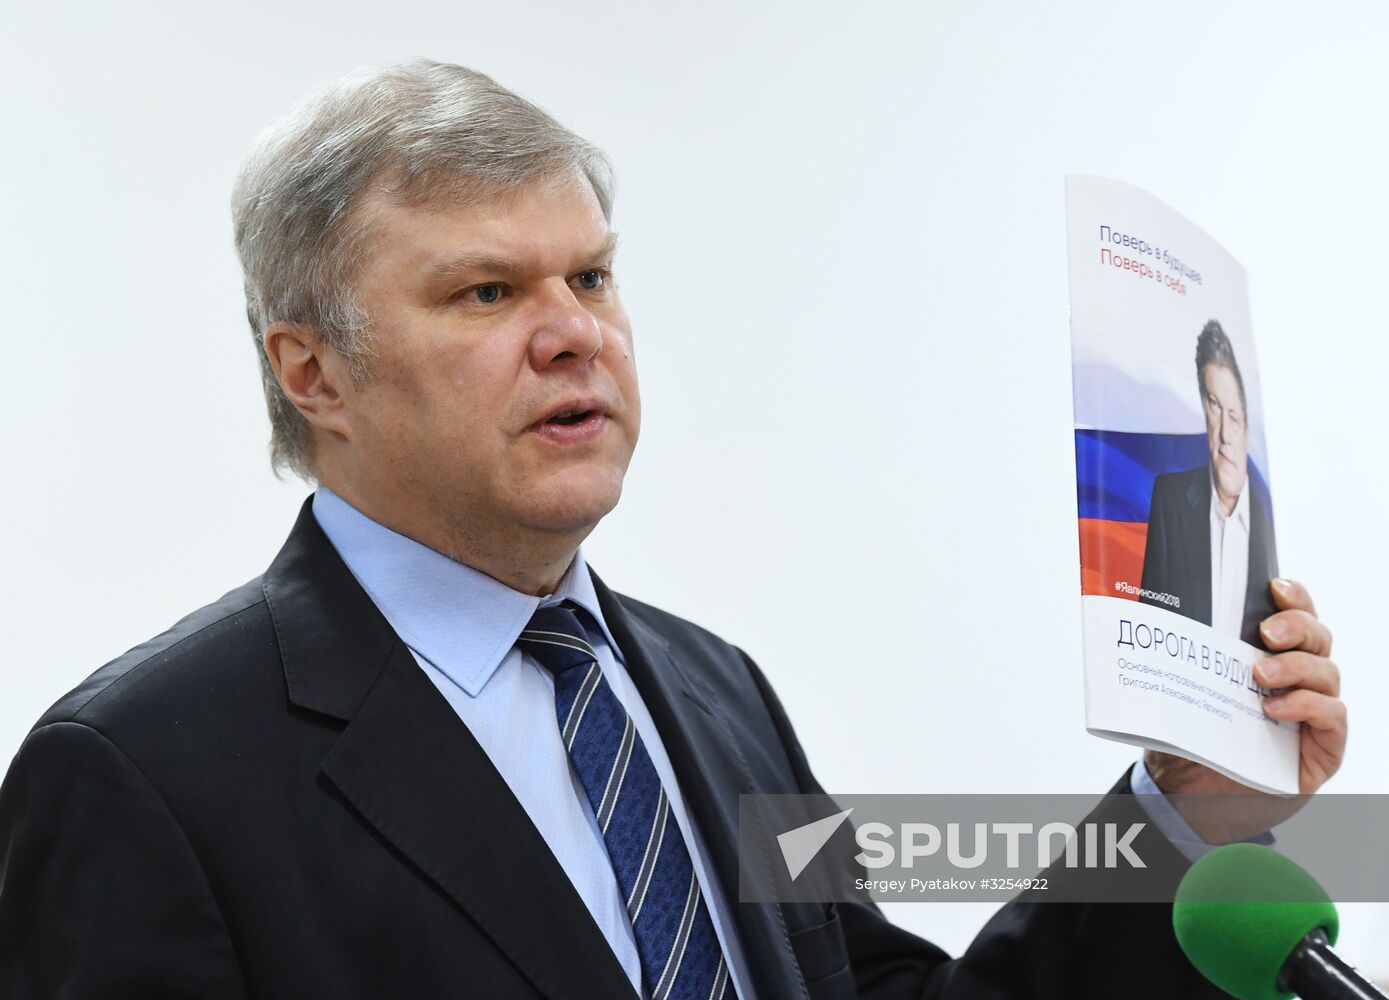 News conference with Sergei Mitrokhin